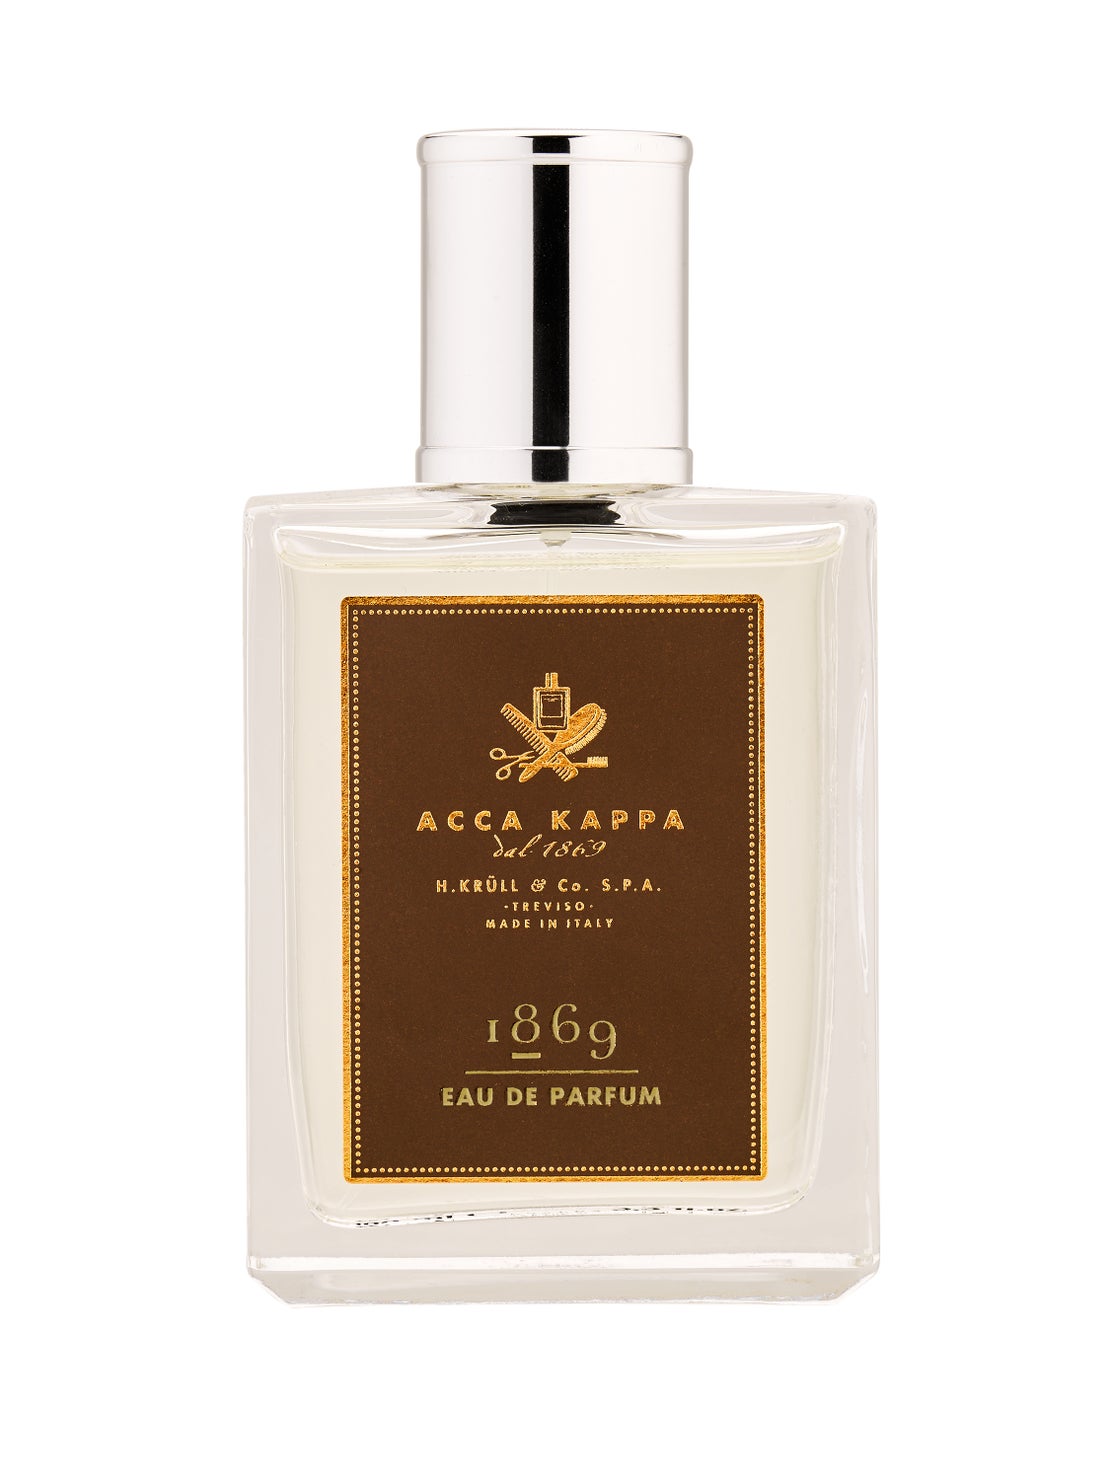 Acca Kappa - 1869 eau de parfum (100ml)